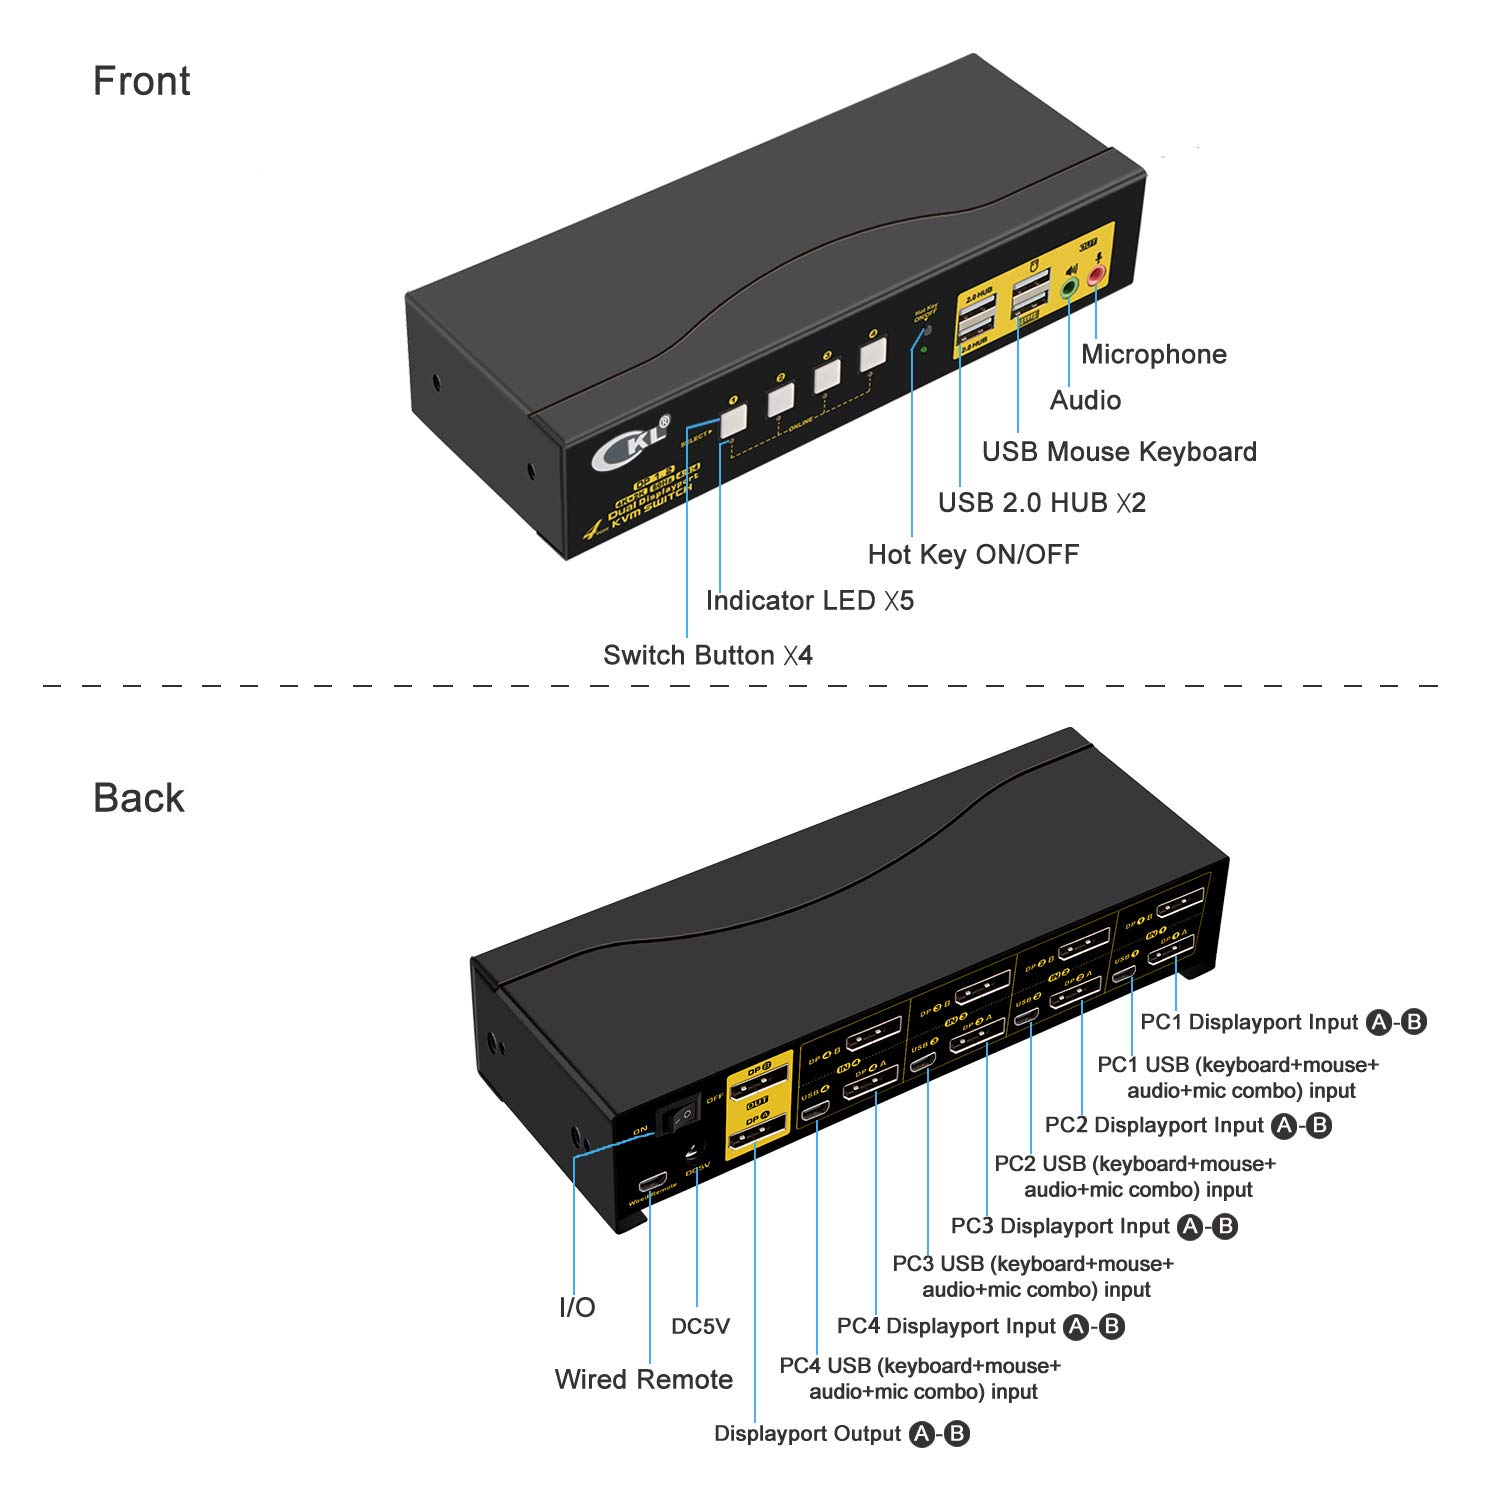 CKL KVM Switch Dual Monitor DisplayPort 4 Port 4K 60Hz 4:4:4, 4x2 DP KVM Switch with Audio and USB 2.0 HUBs (CKL-642DP)